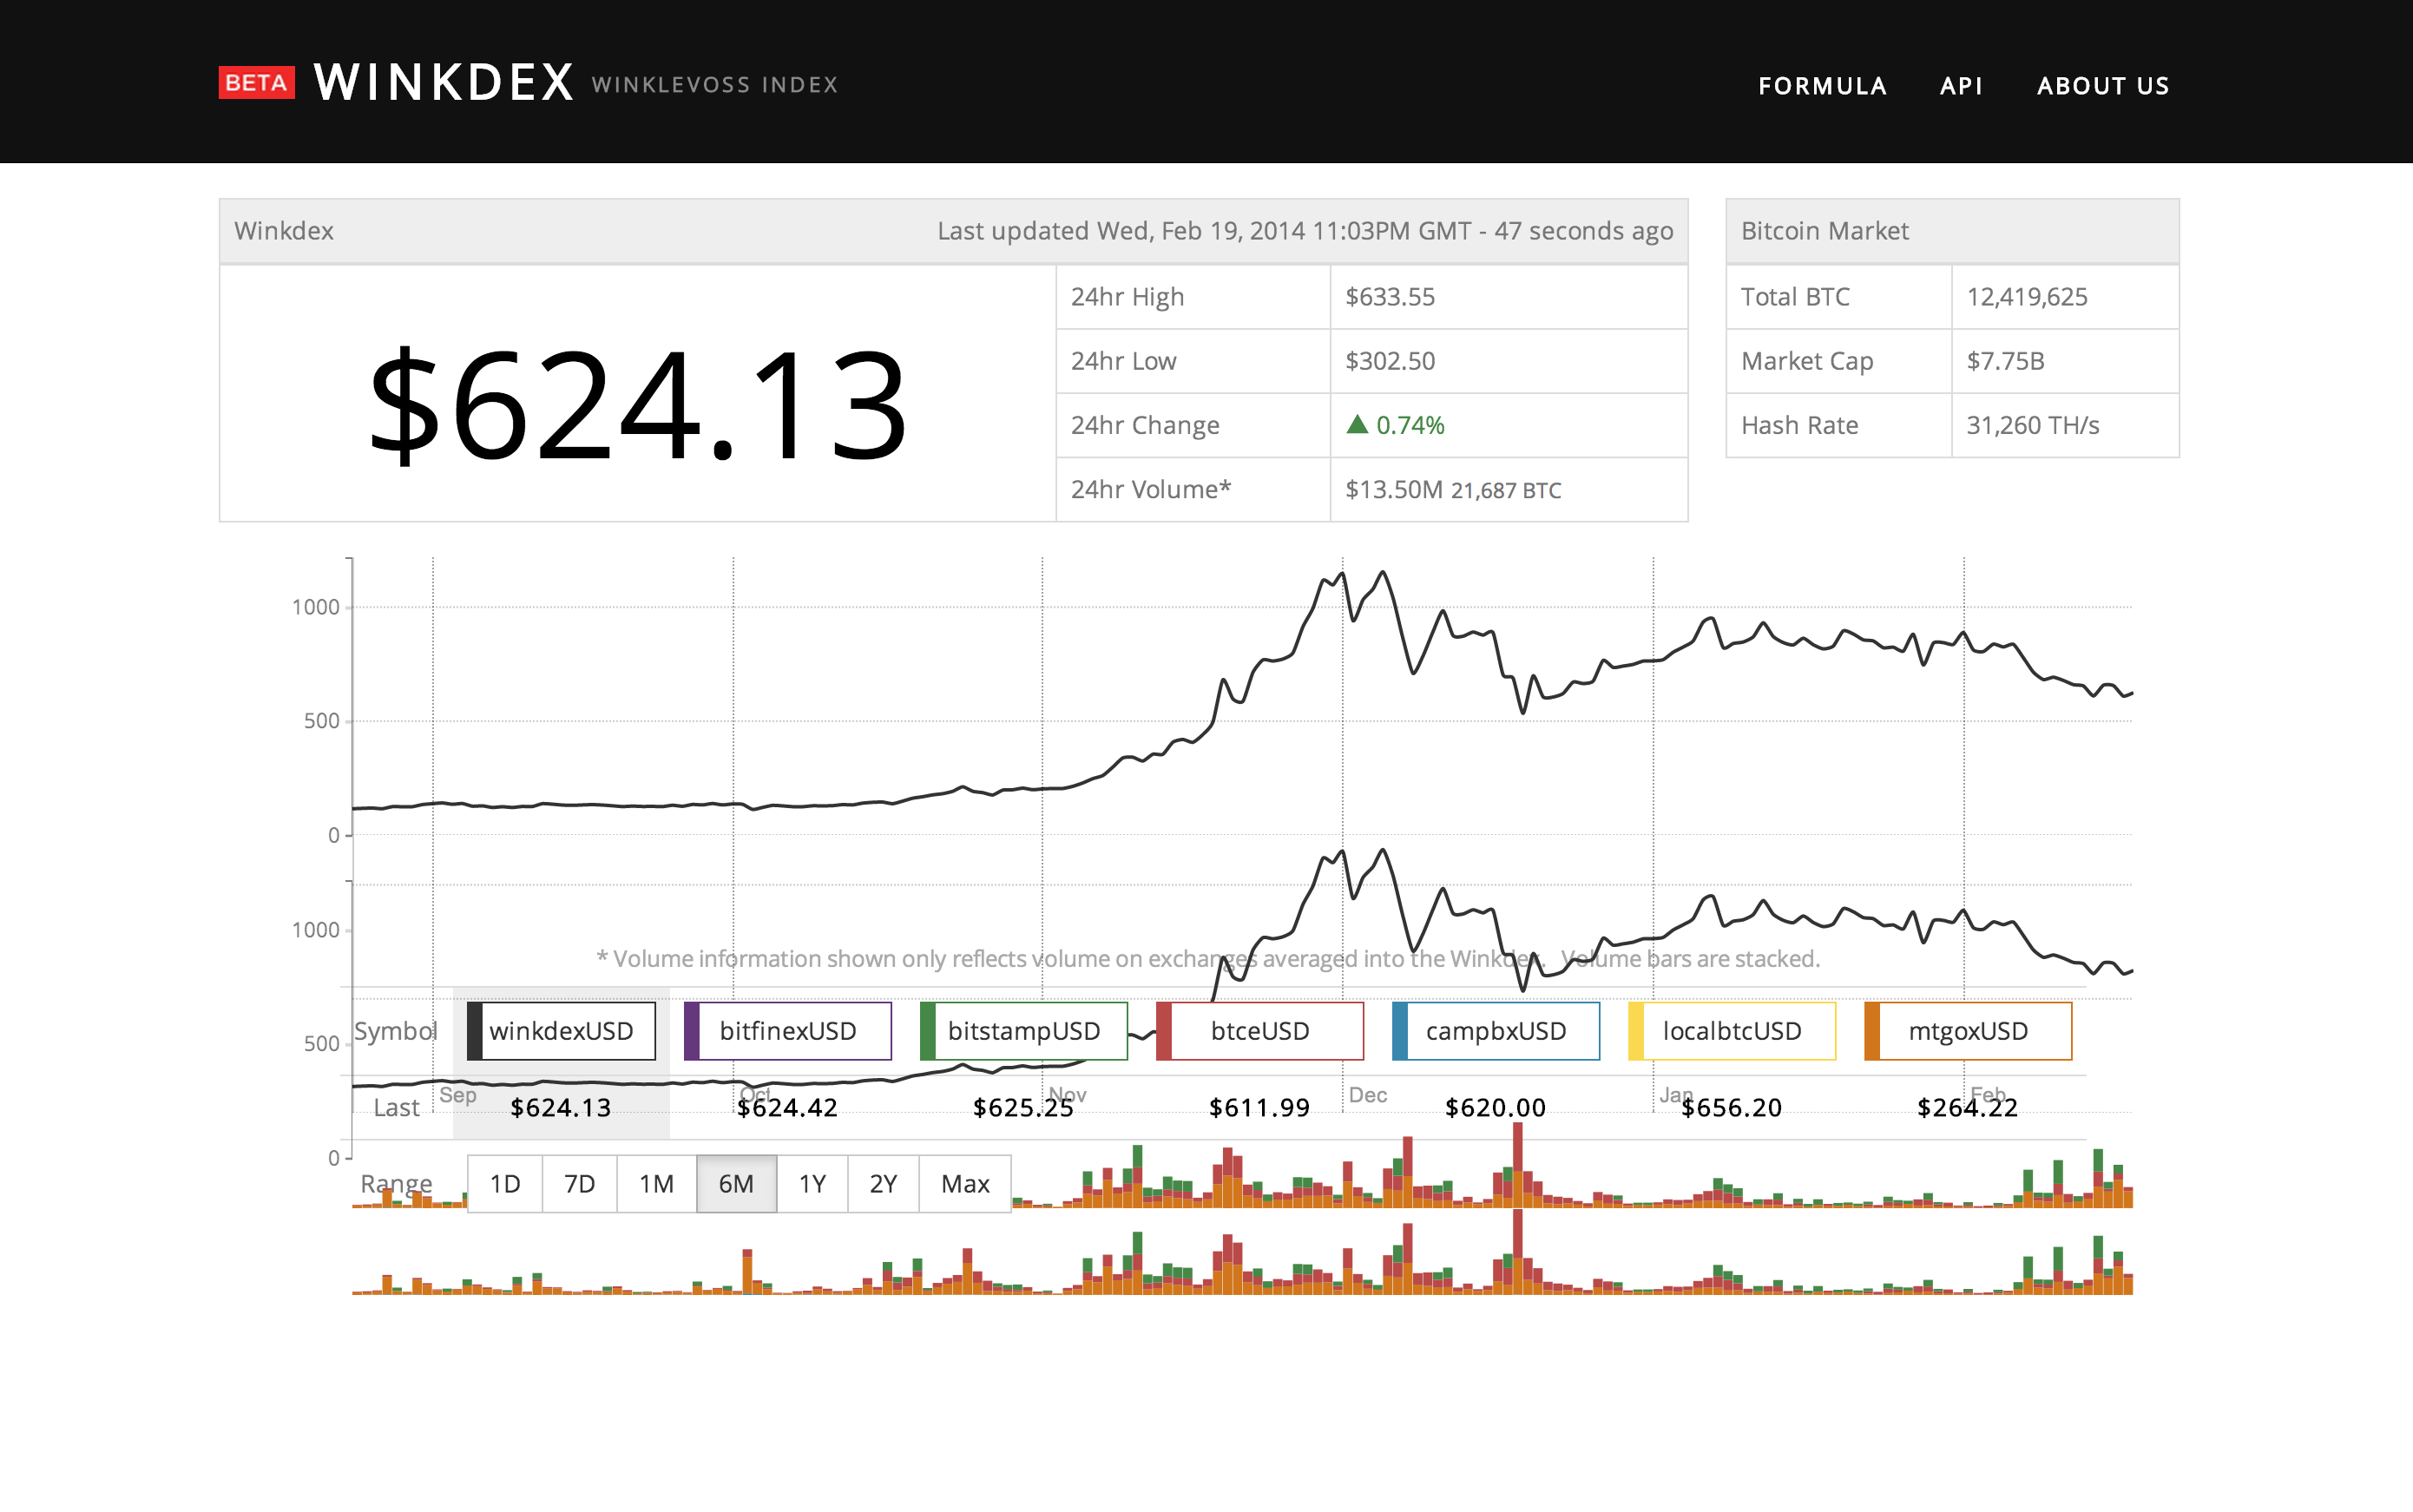 Winklevoss-Winkdex-bitcoin-price-index-02.png - 272.91 kB 